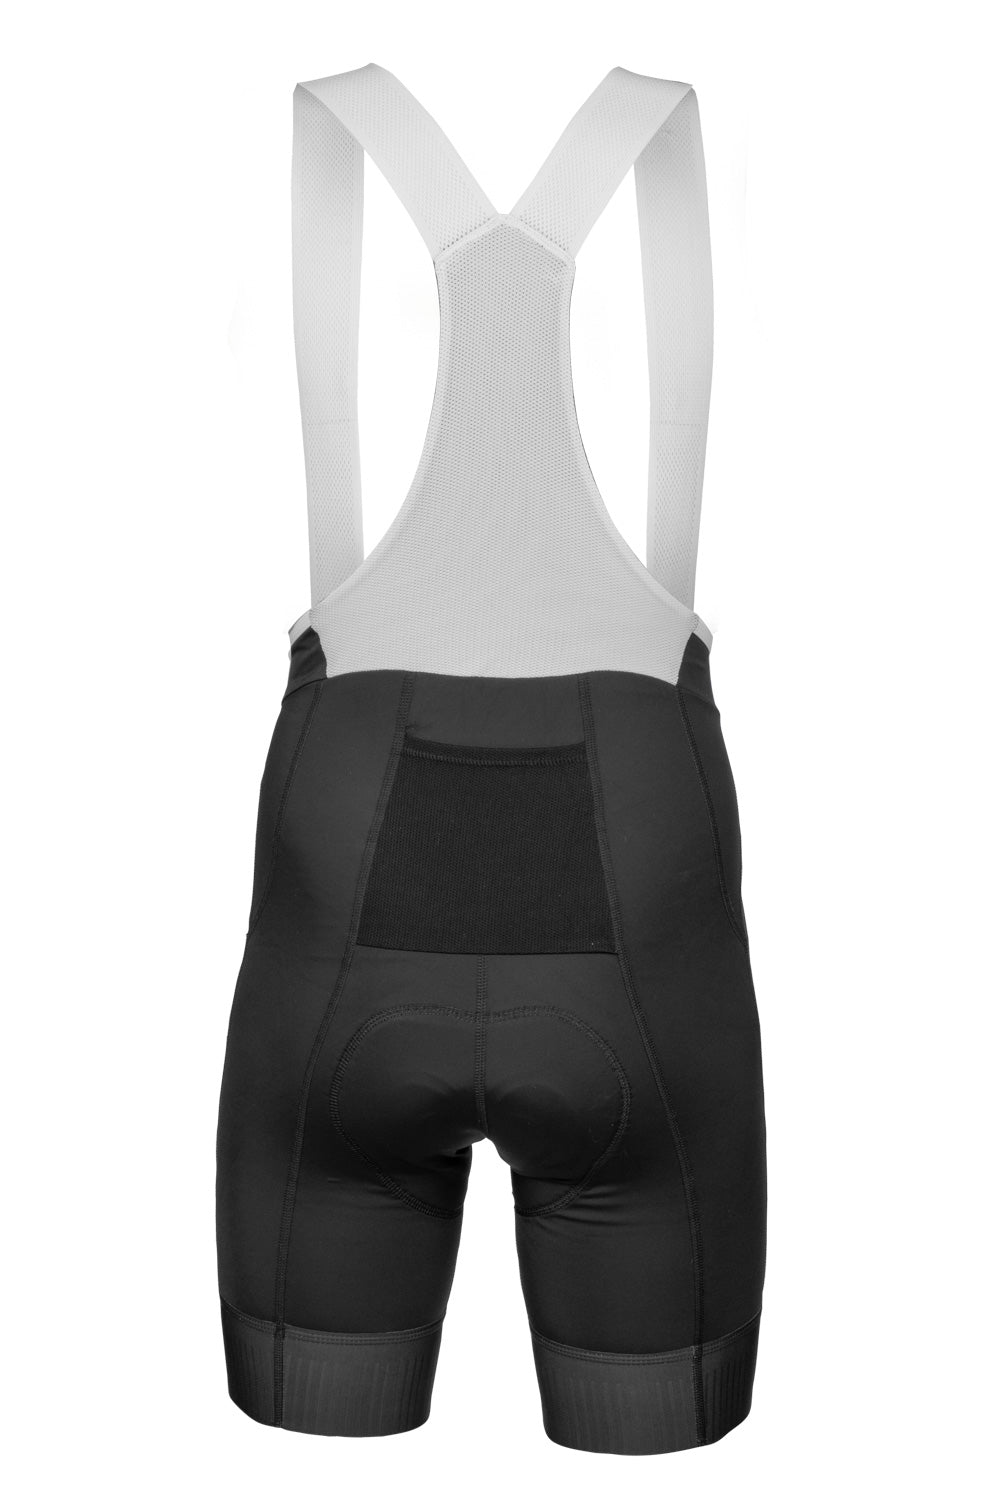 Carnac Men's Haute Bib Shorts / Black